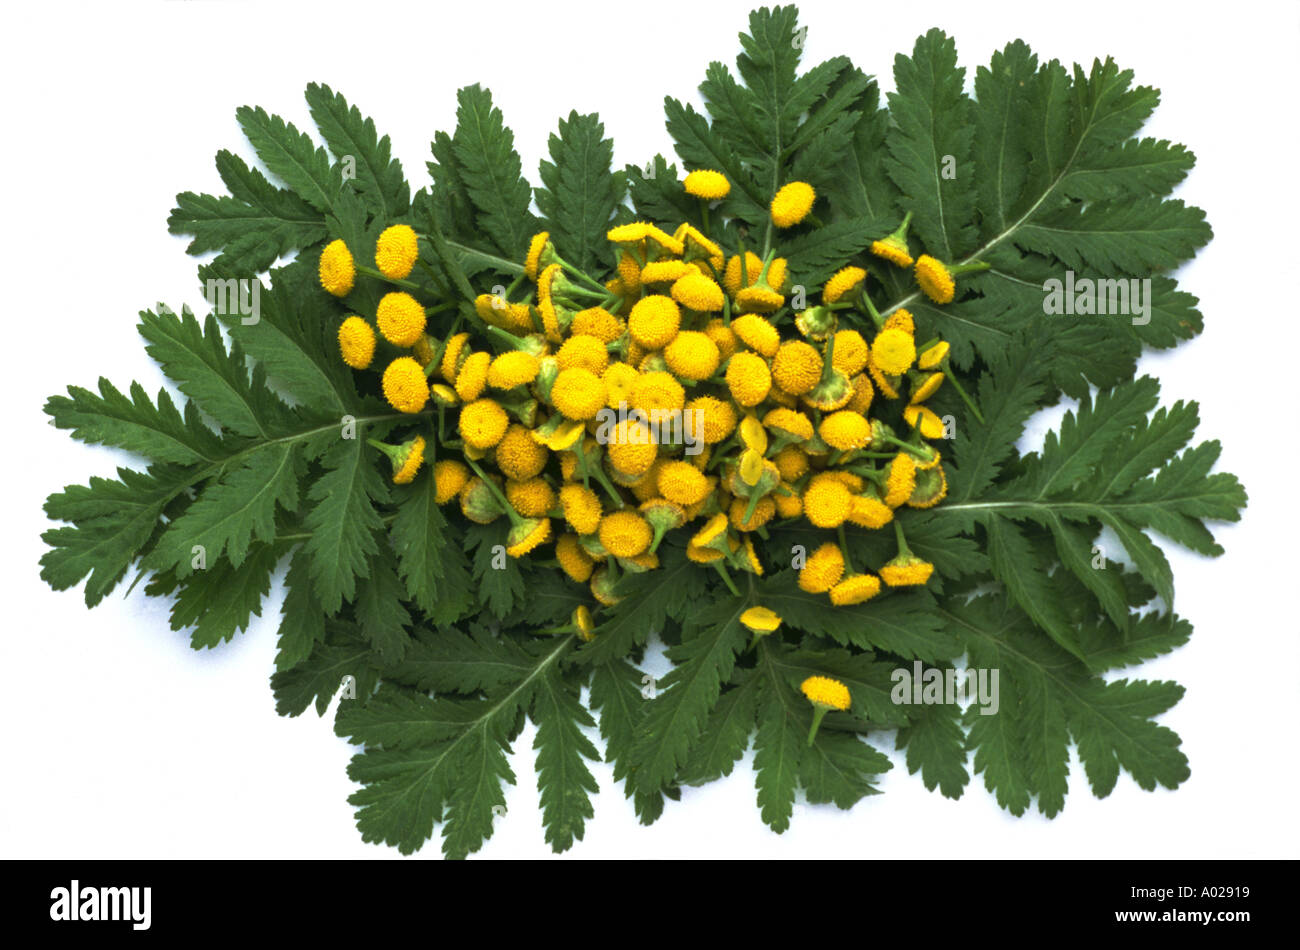 Tansy tanecetum vulgare Rainfarn medicinal plant Stock Photo